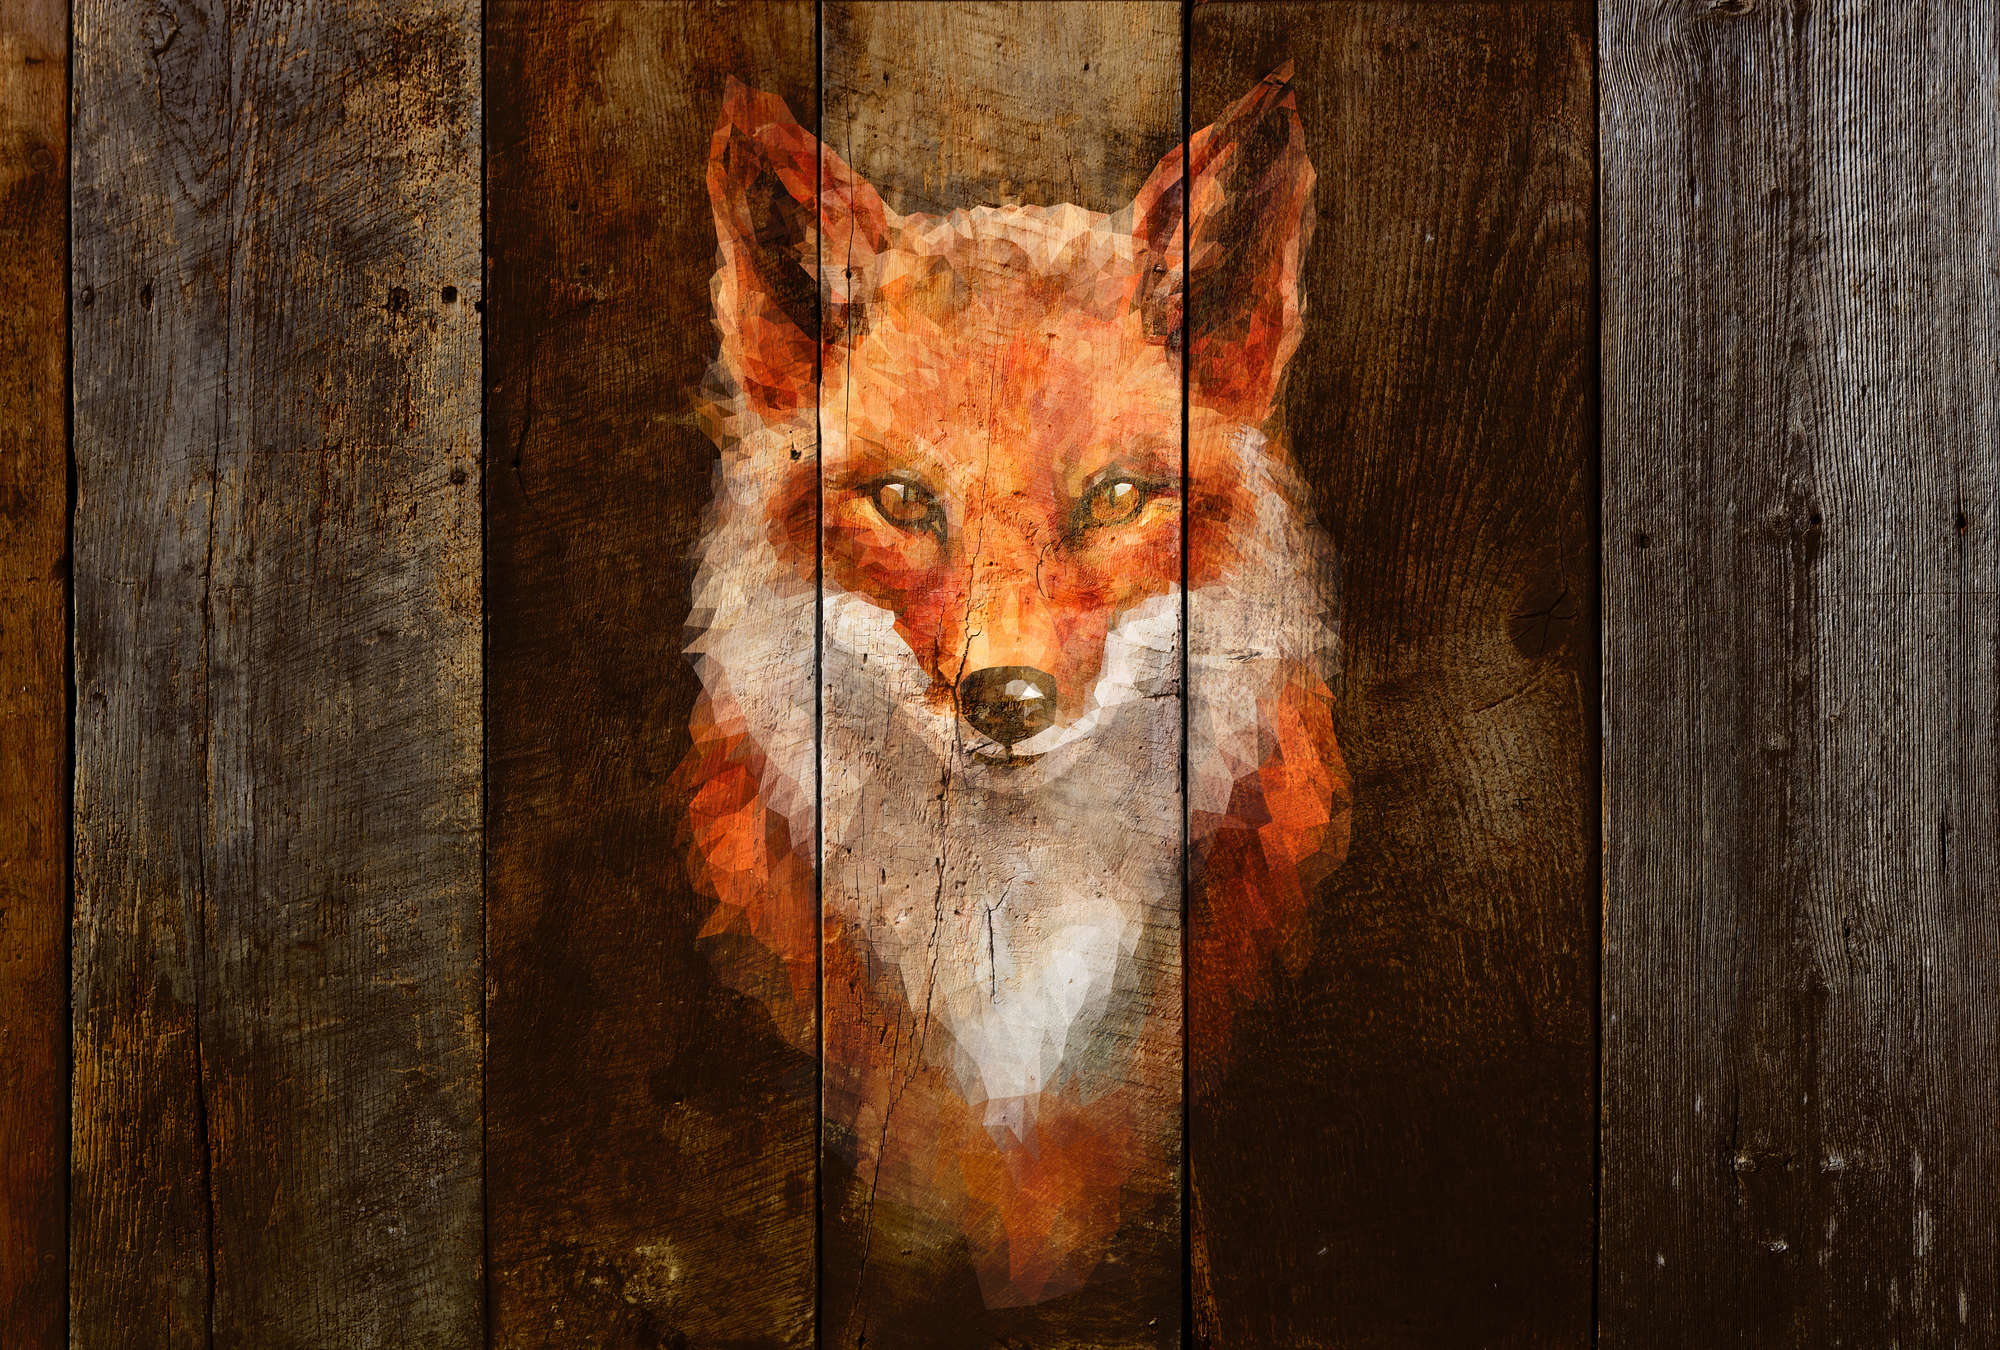             Papier peint renard & aspect bois avec design polygonal - orange, marron, blanc
        